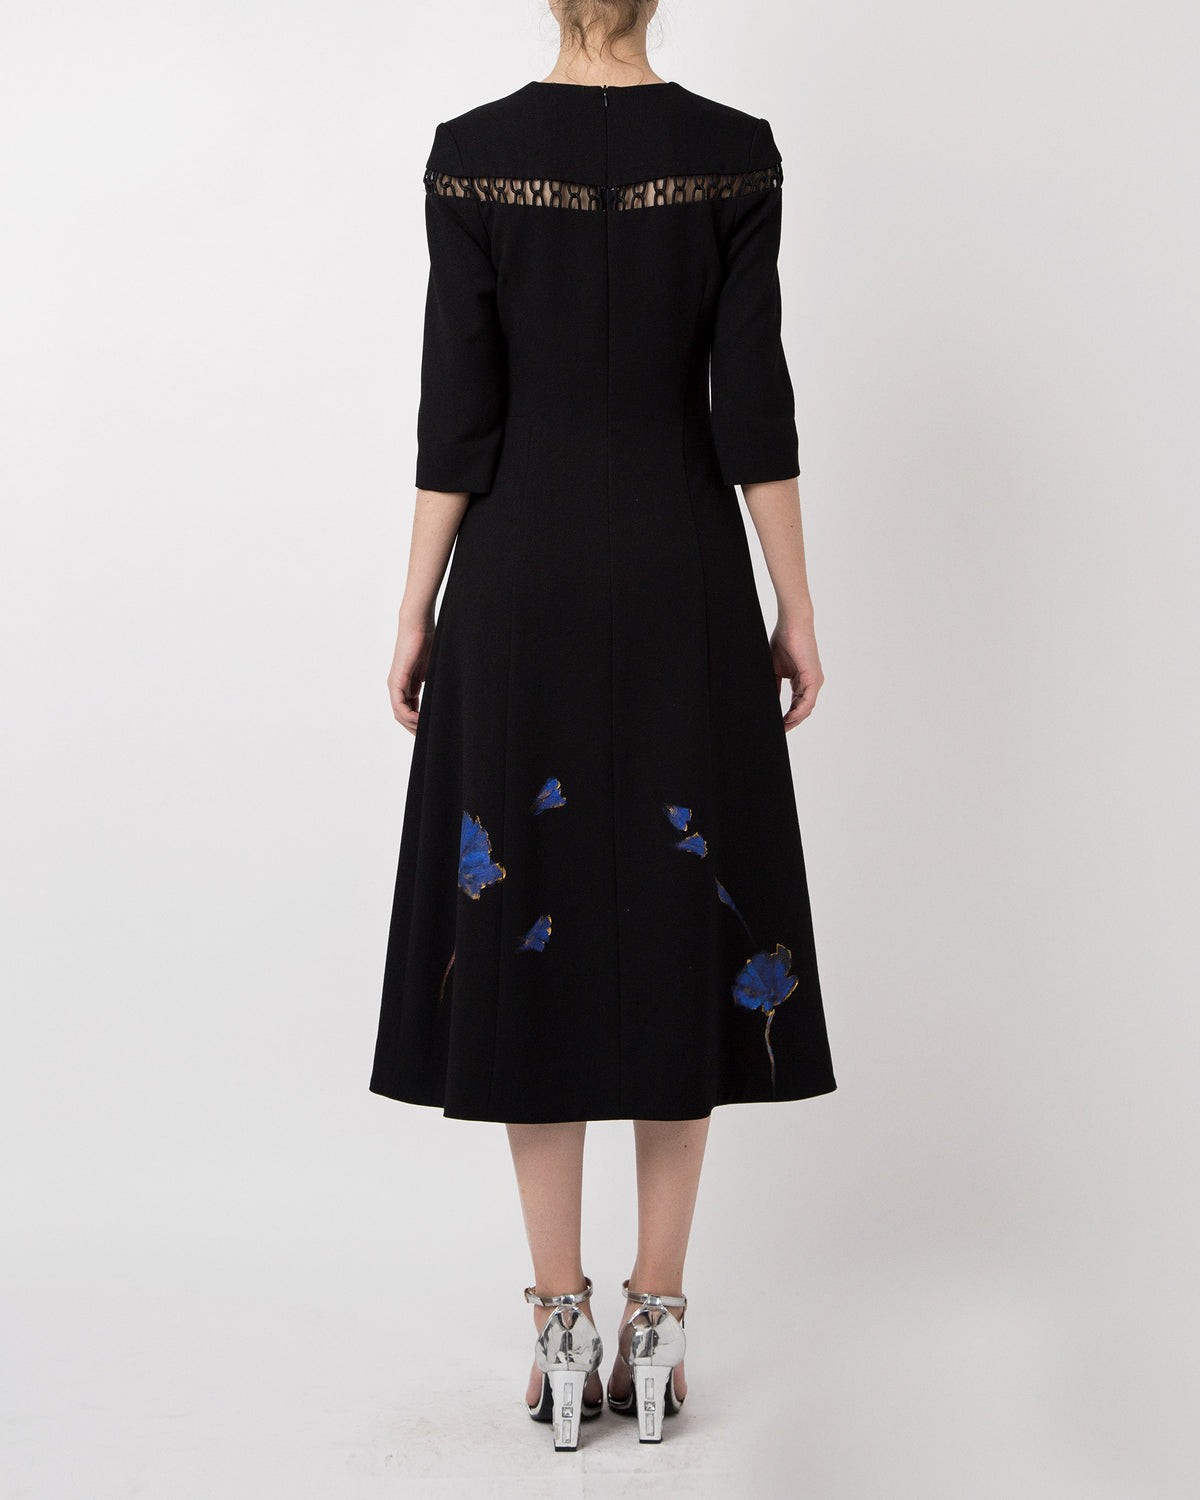 Phoenix in poppy-painted  mid-length Sleeve Black Skater Dress.